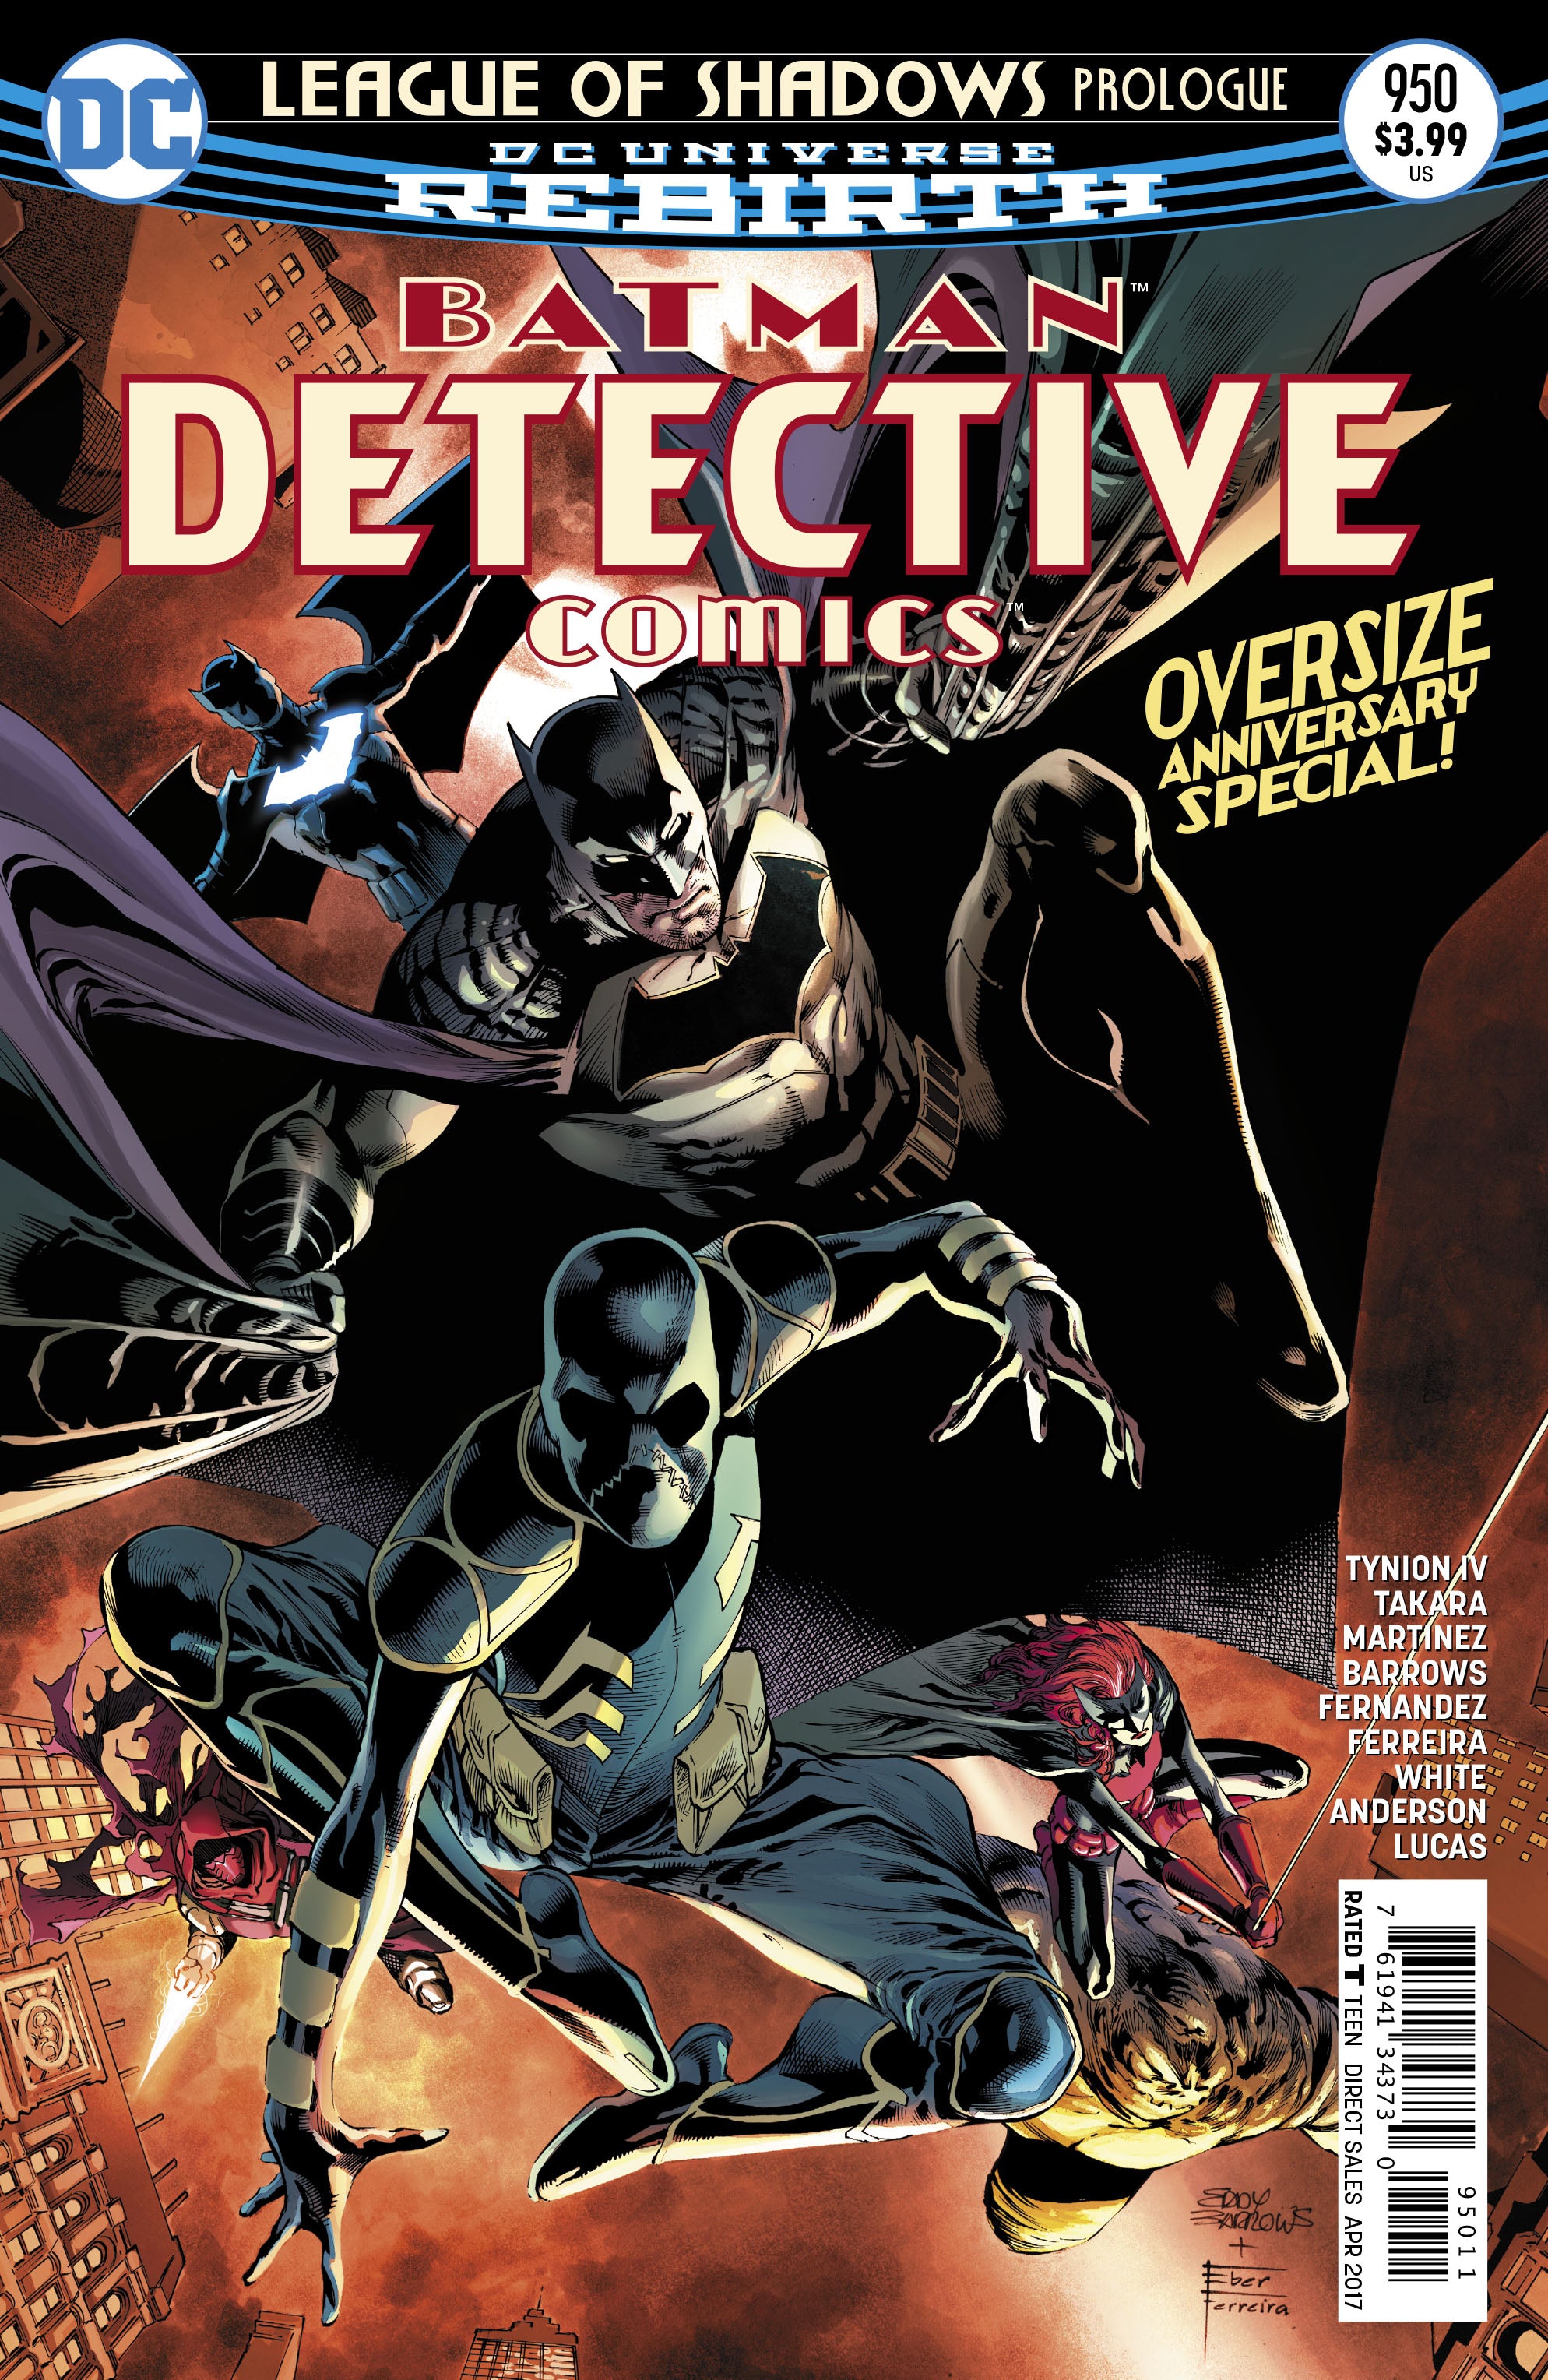 DETECTIVE COMICS #950 | Game Master's Emporium (The New GME)